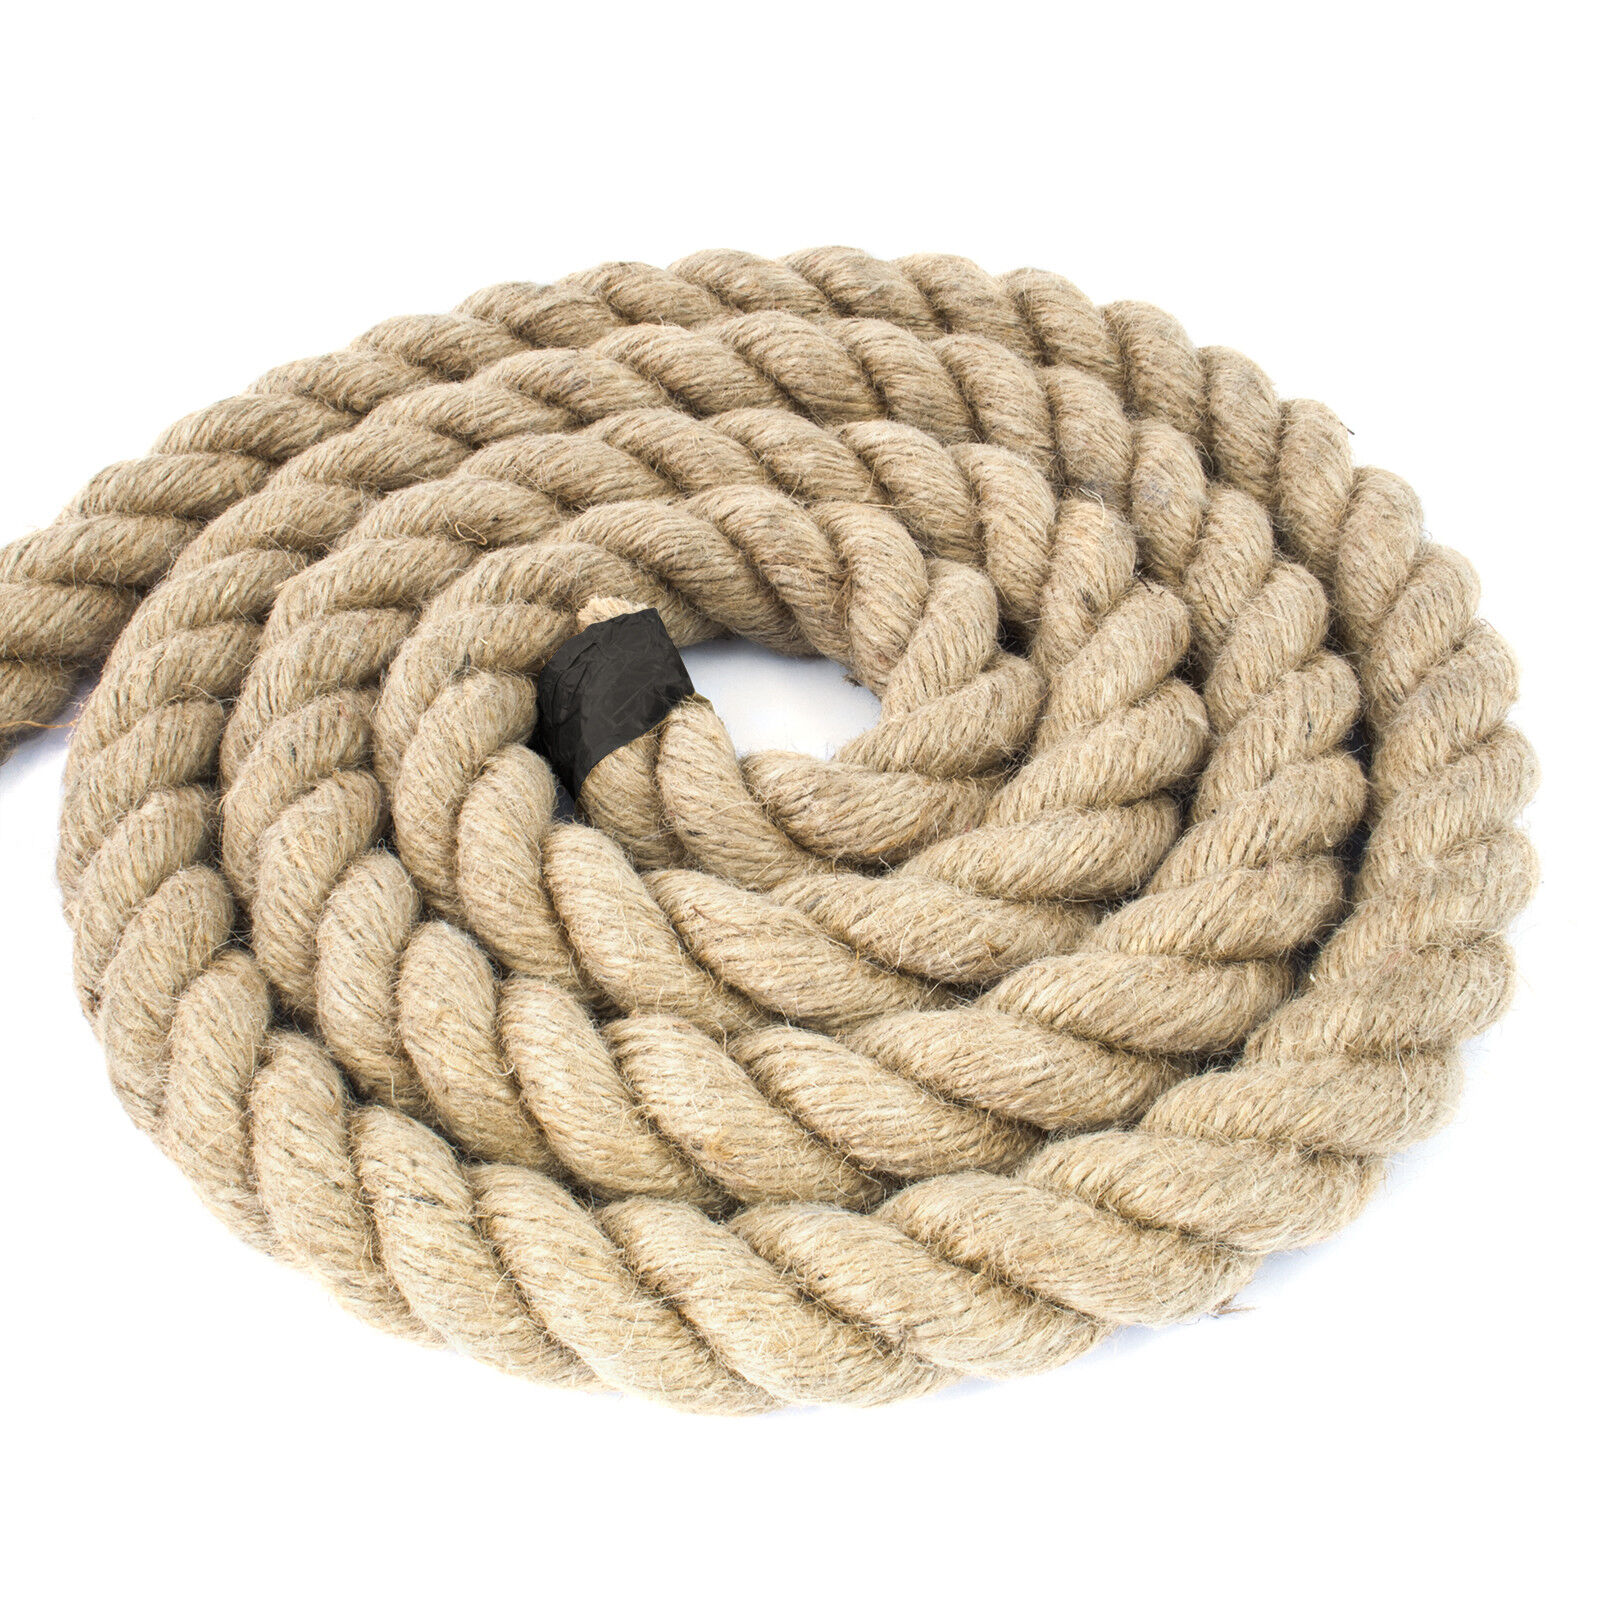 30mm - 60mm naturalne konopie JUTESEIL Rope Rope Rope Hemp rope Rope Jute Turned przeciąganie liny Tanie i popularne